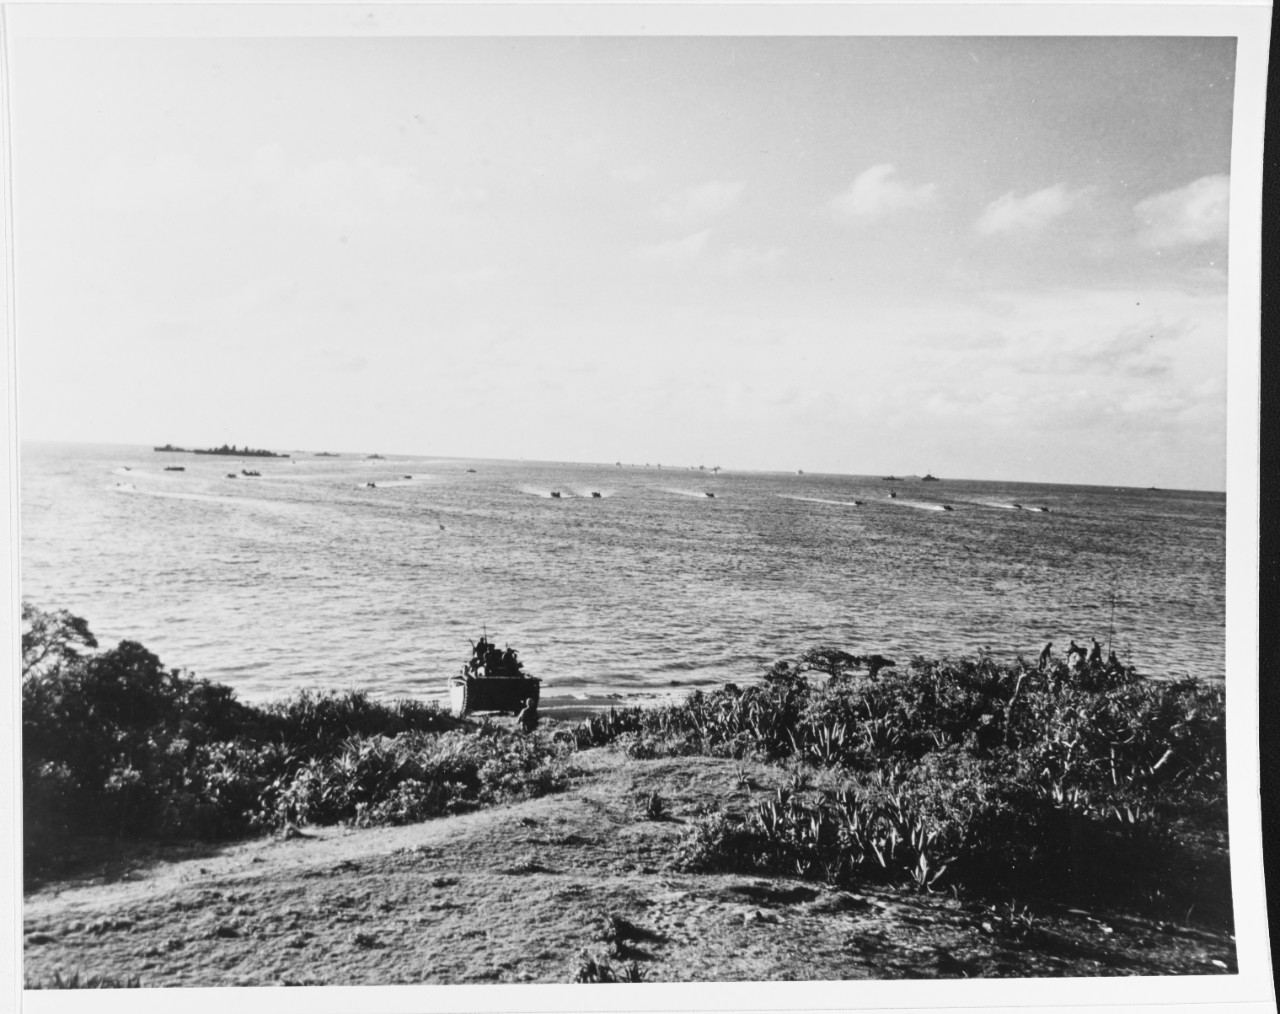 Landings at Aguni Shima, Ryukyu Islands, 9 June 1945.